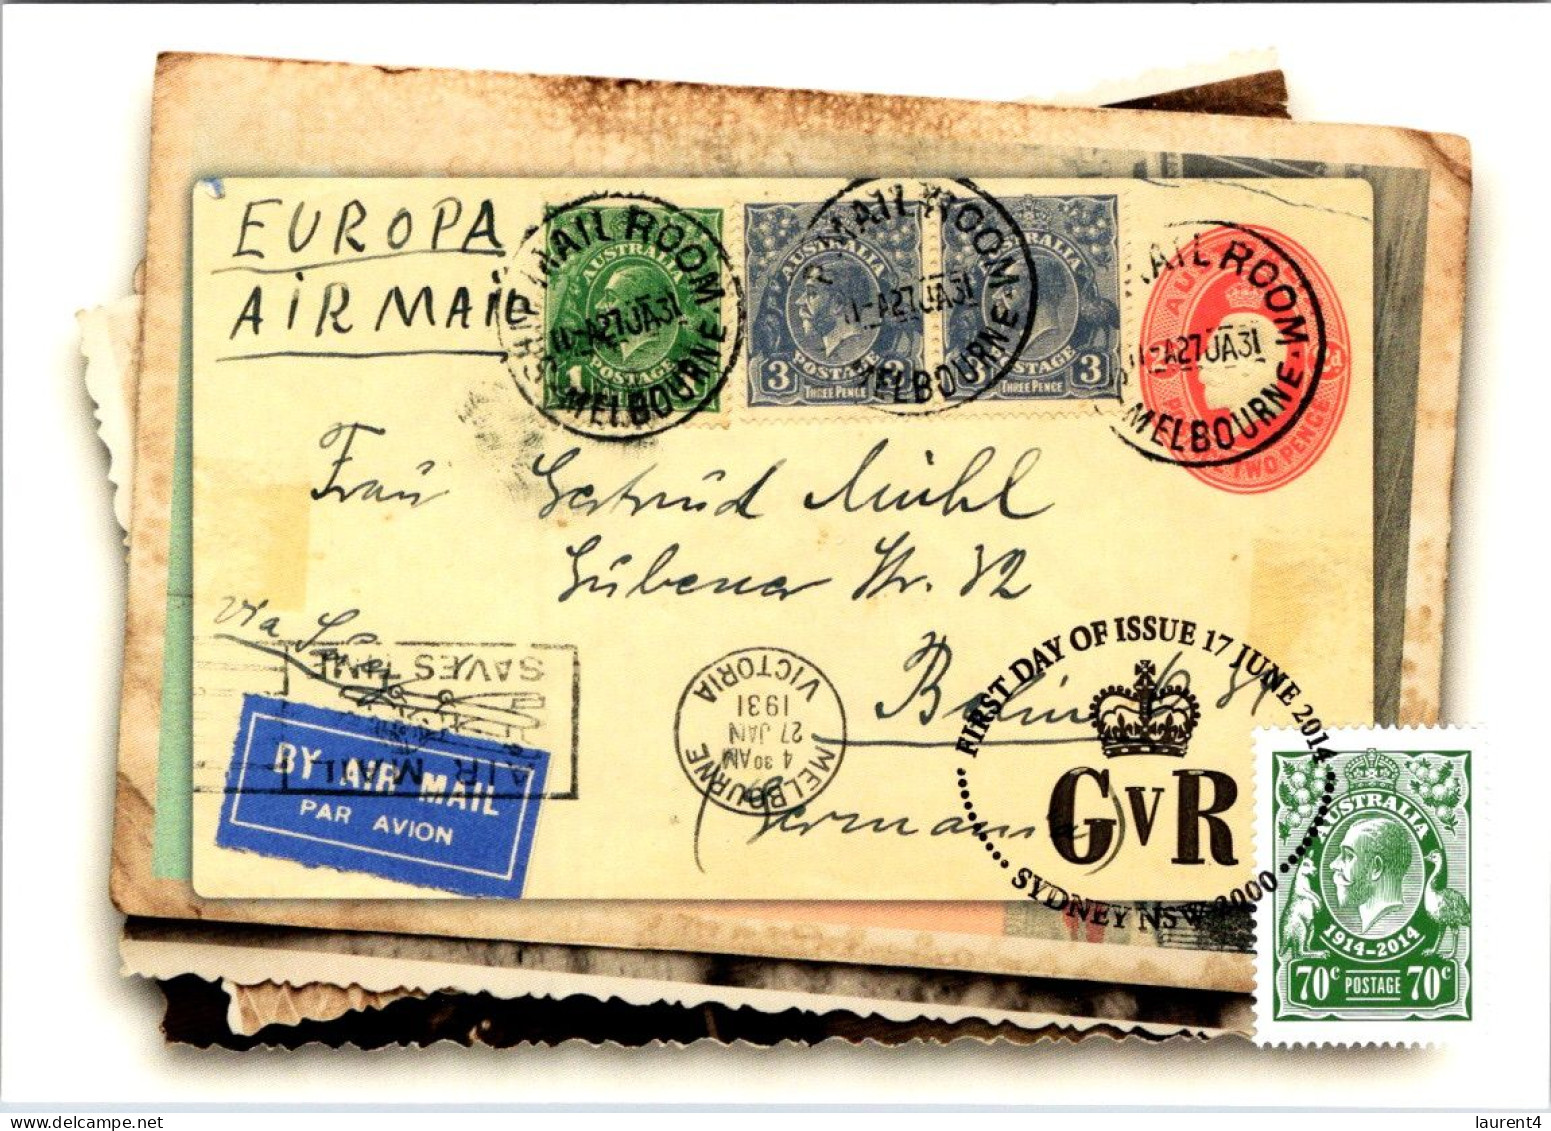 19-5-2024 (5 Z 31) Australia - King George V Centenary of Stamps (set of 4 SCARCE maxicards)